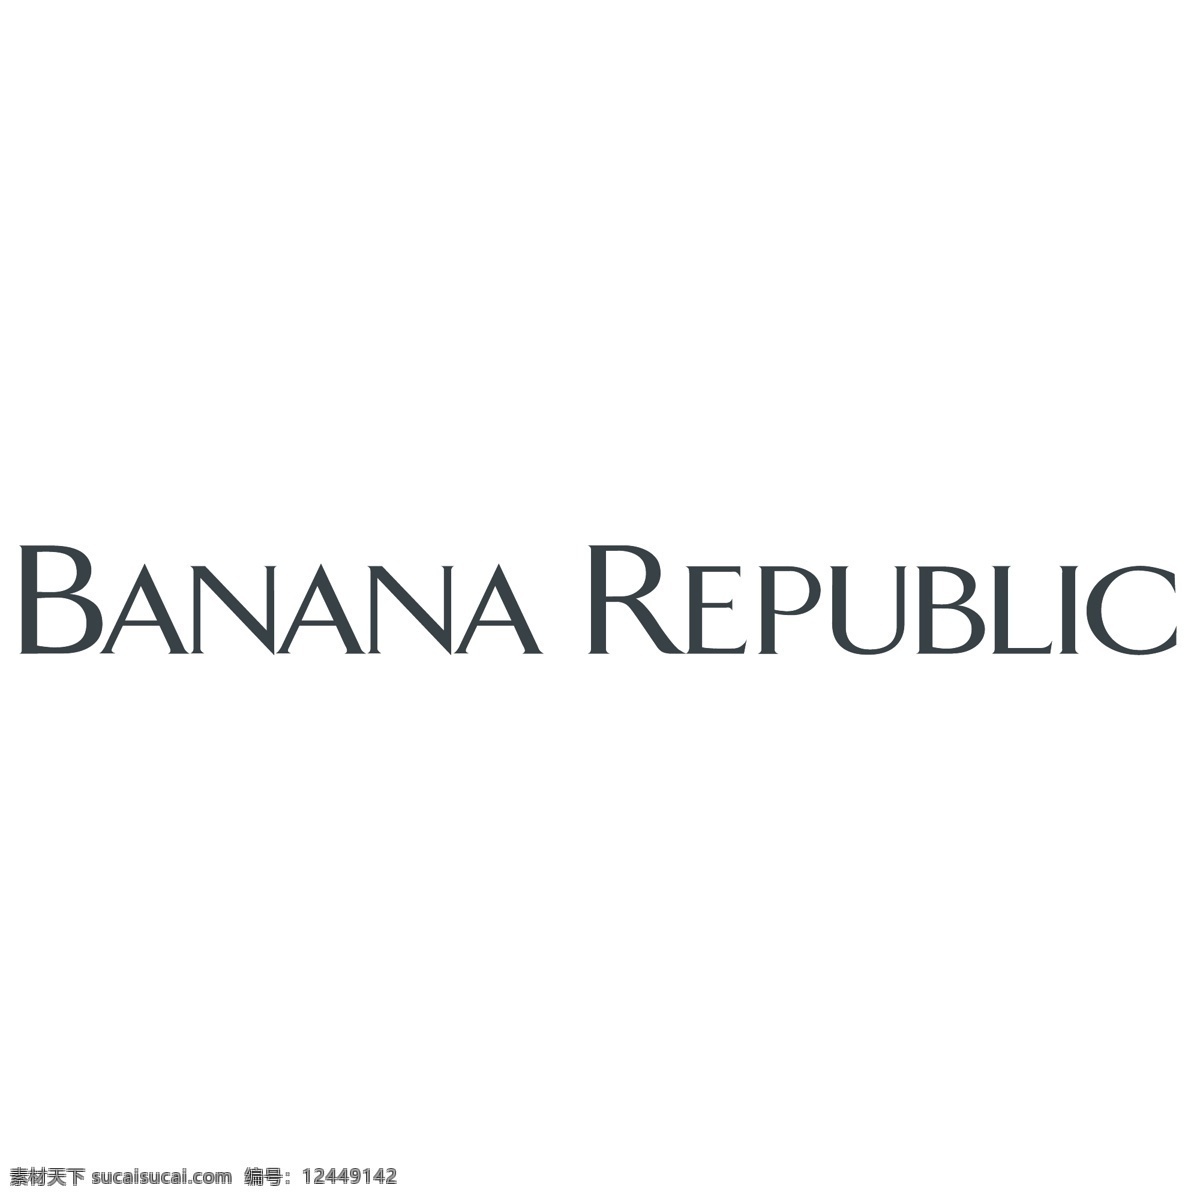 bananarepublic 男女 服装 自由 男性 女性 标志 免费 psd源文件 logo设计